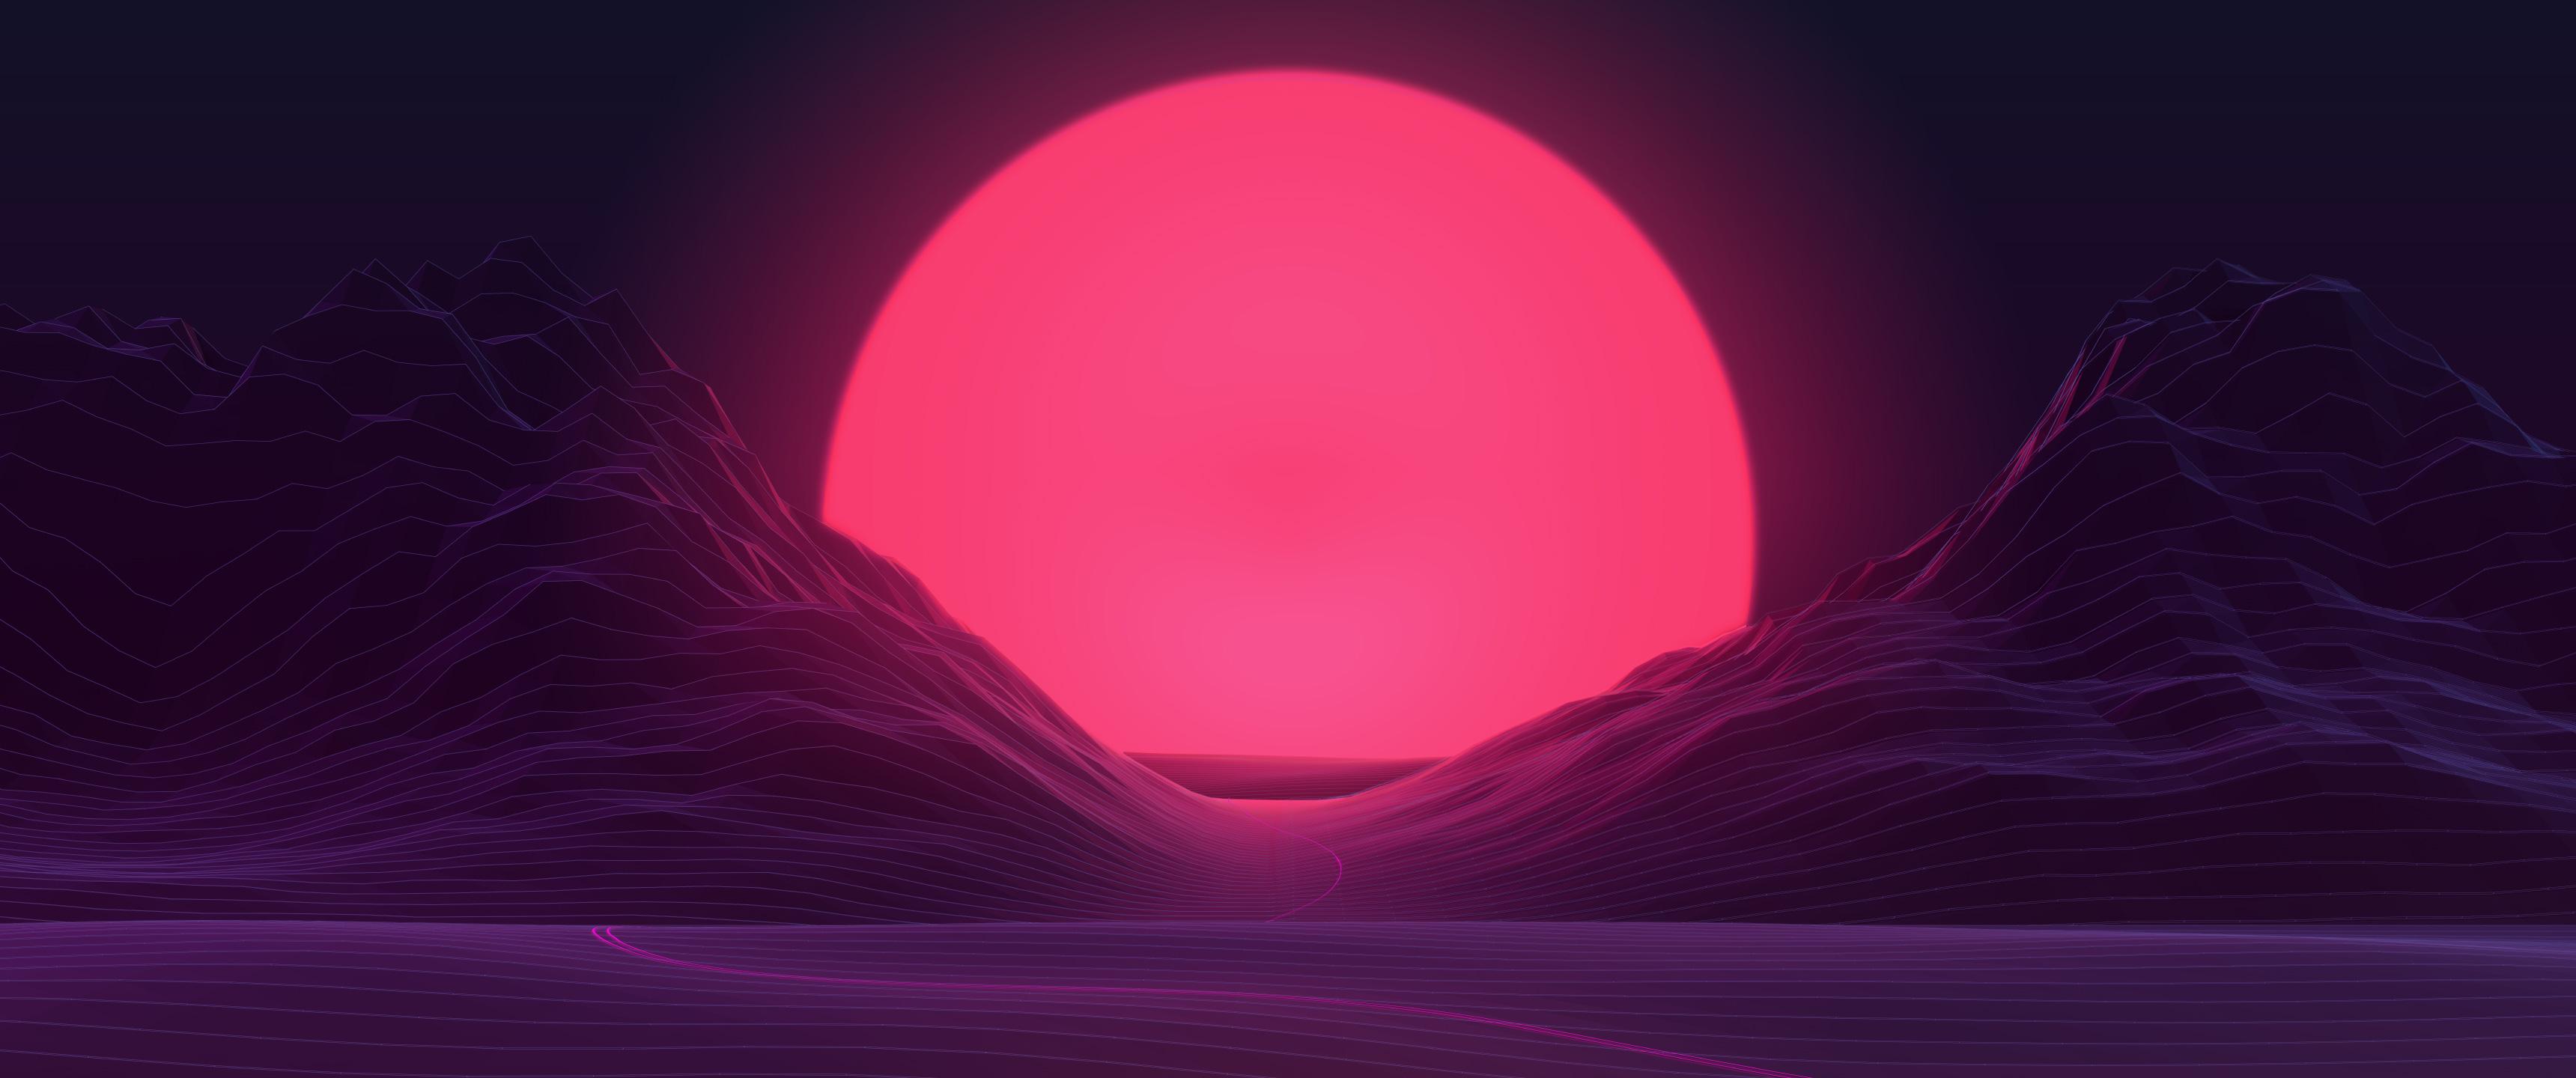 Big Sun Neon Mountains 4k, HD Artist, 4k Wallpaper, Image